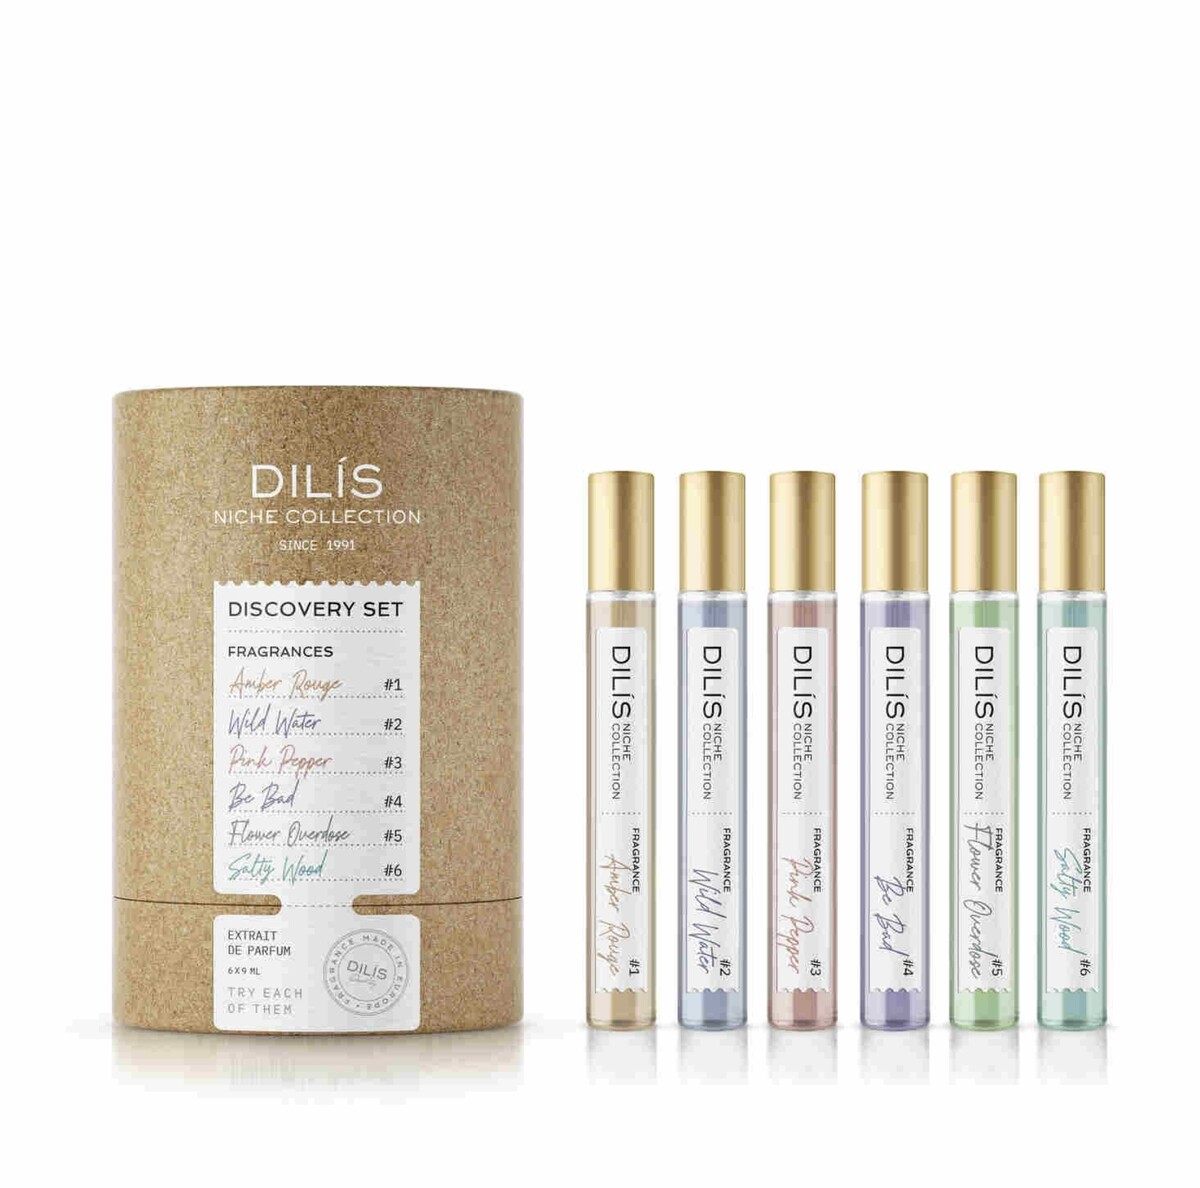 Dilis discovery set dnc духи для женщин парфюмерный набор (6*9мл) 54мл niche collection духи salty wood 50мл